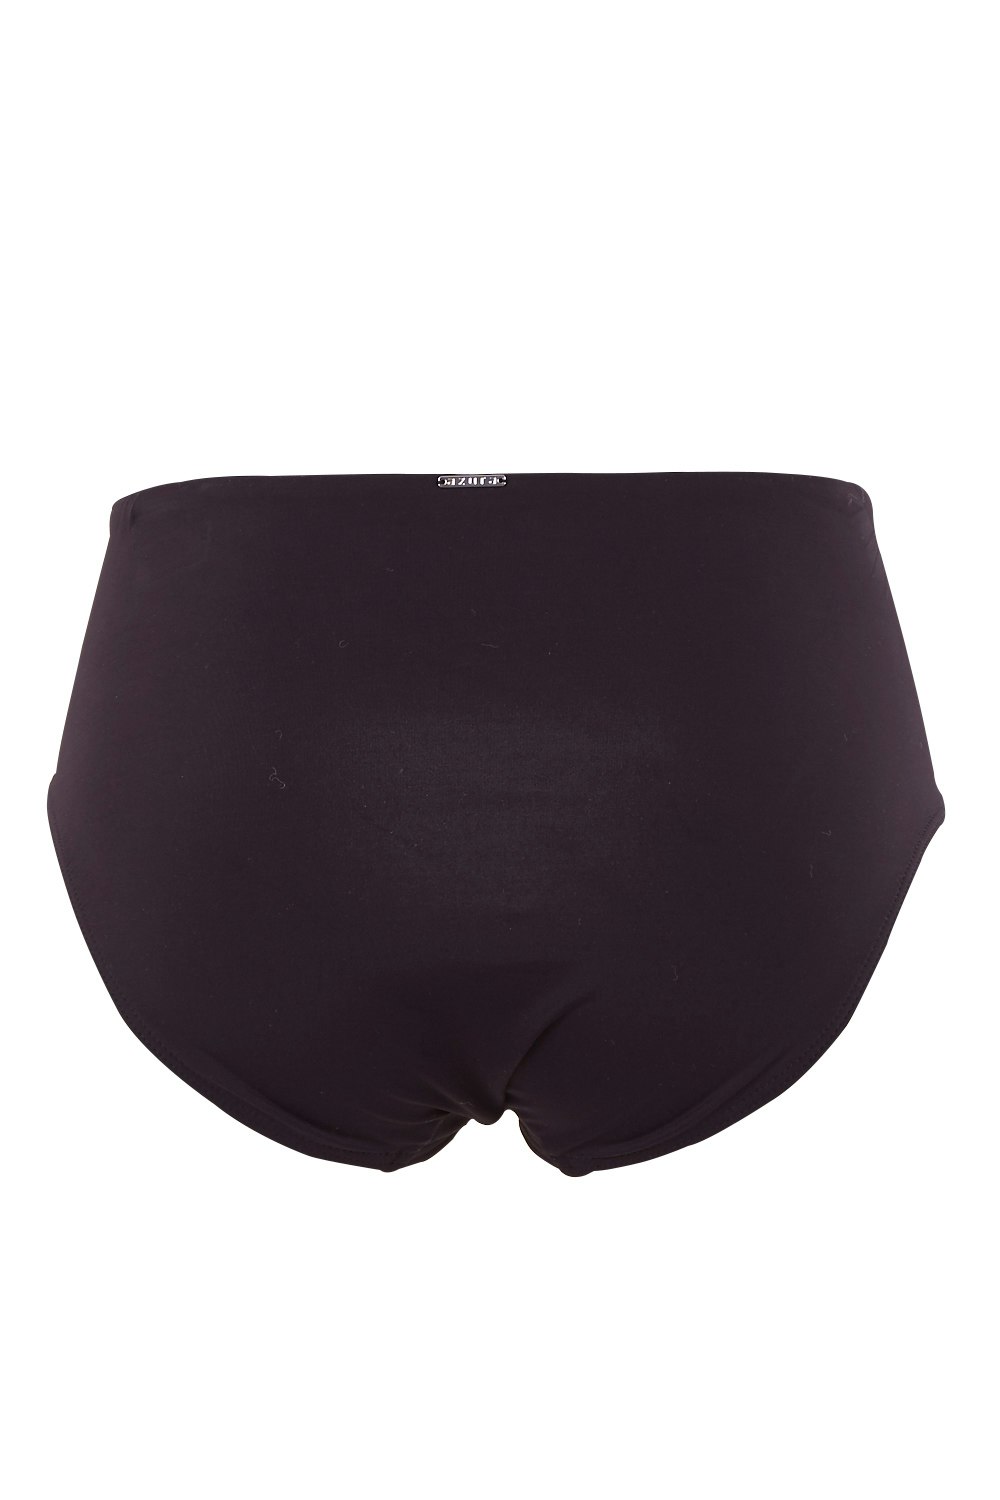 Sunseeker Slim Fit Pant - Womens Separates - Birdsnest Online Fashion Store